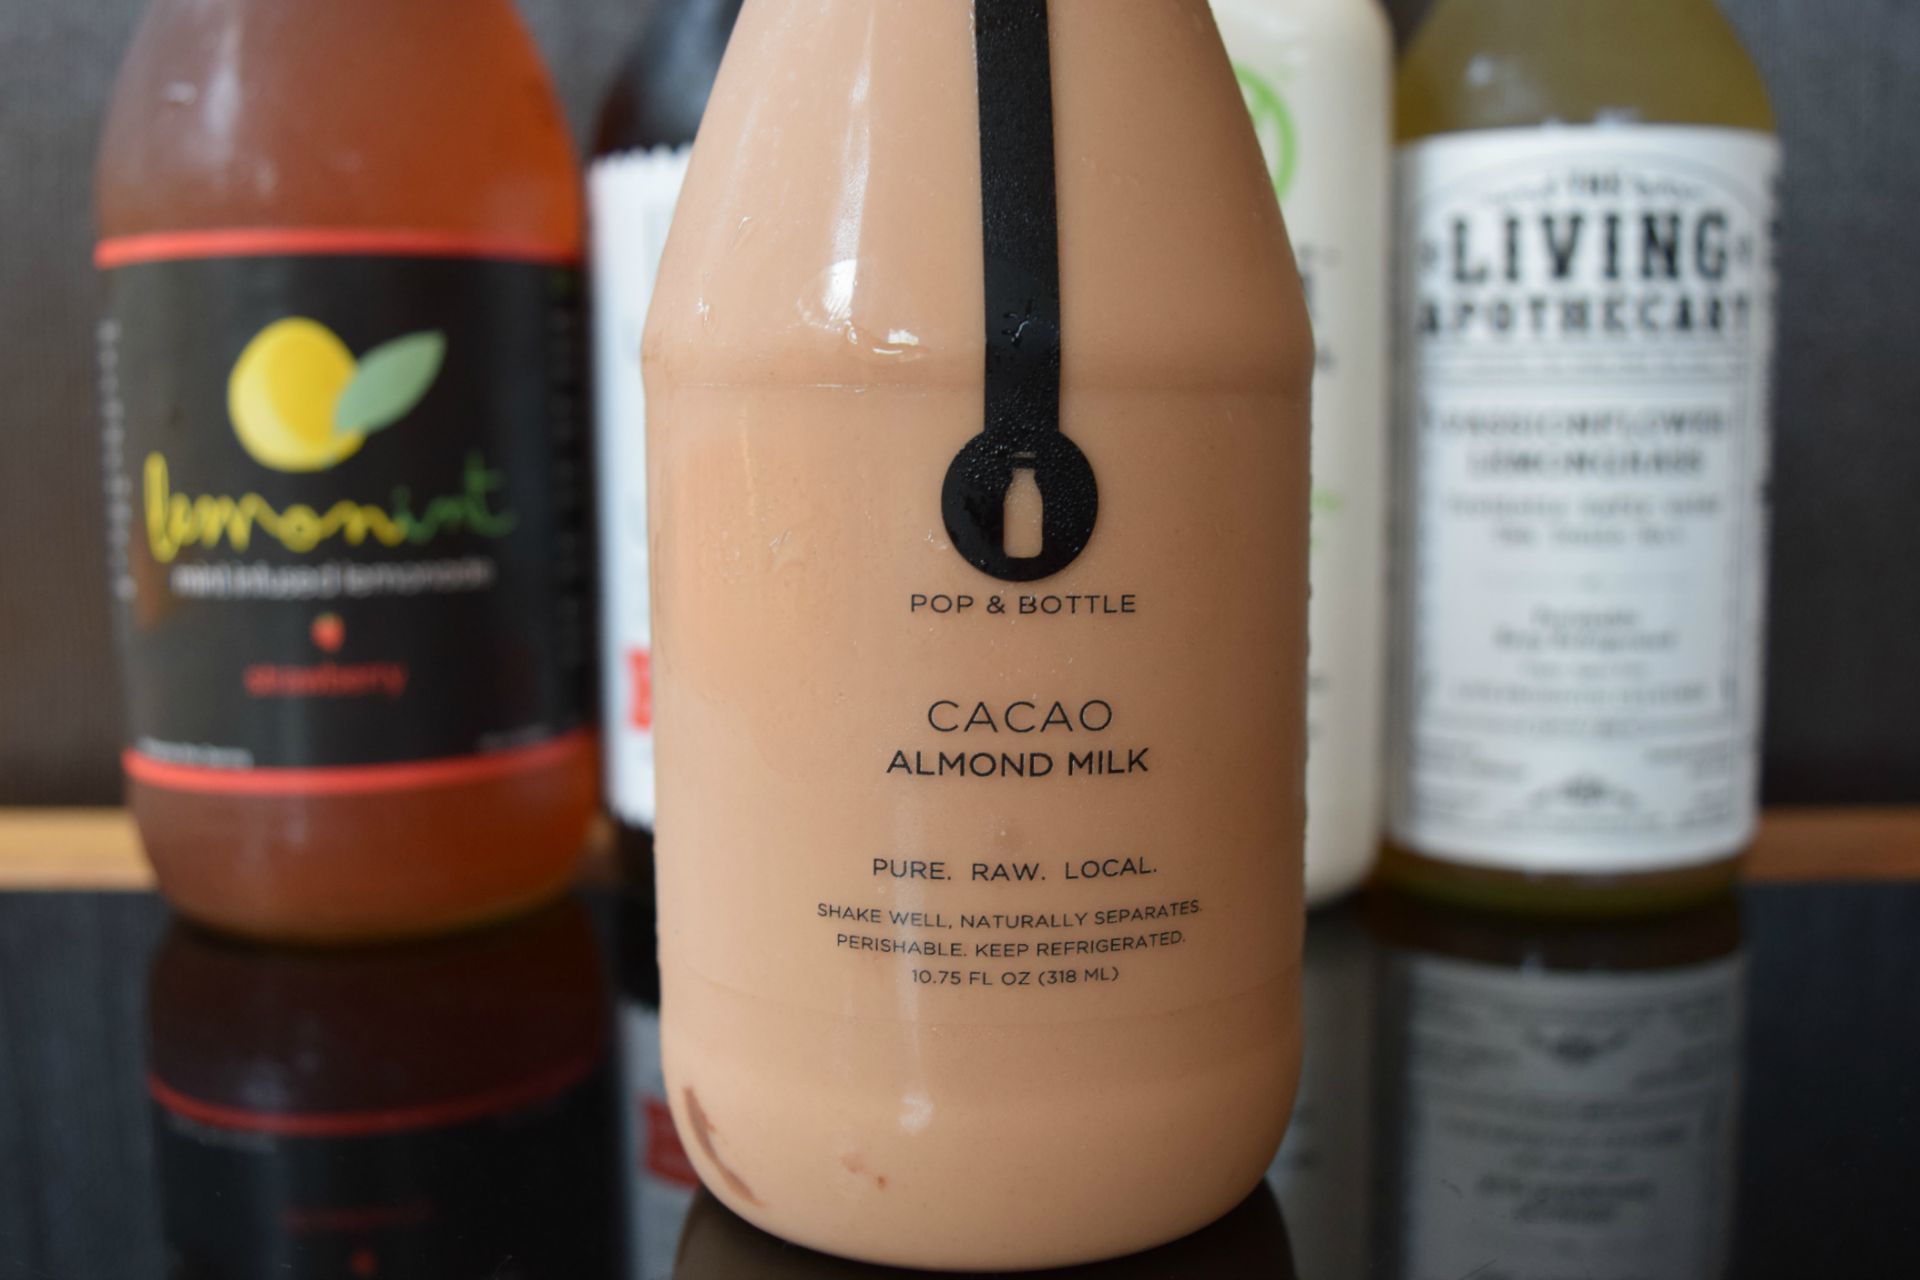 Pop & Bottle Cacao Almond Milk.